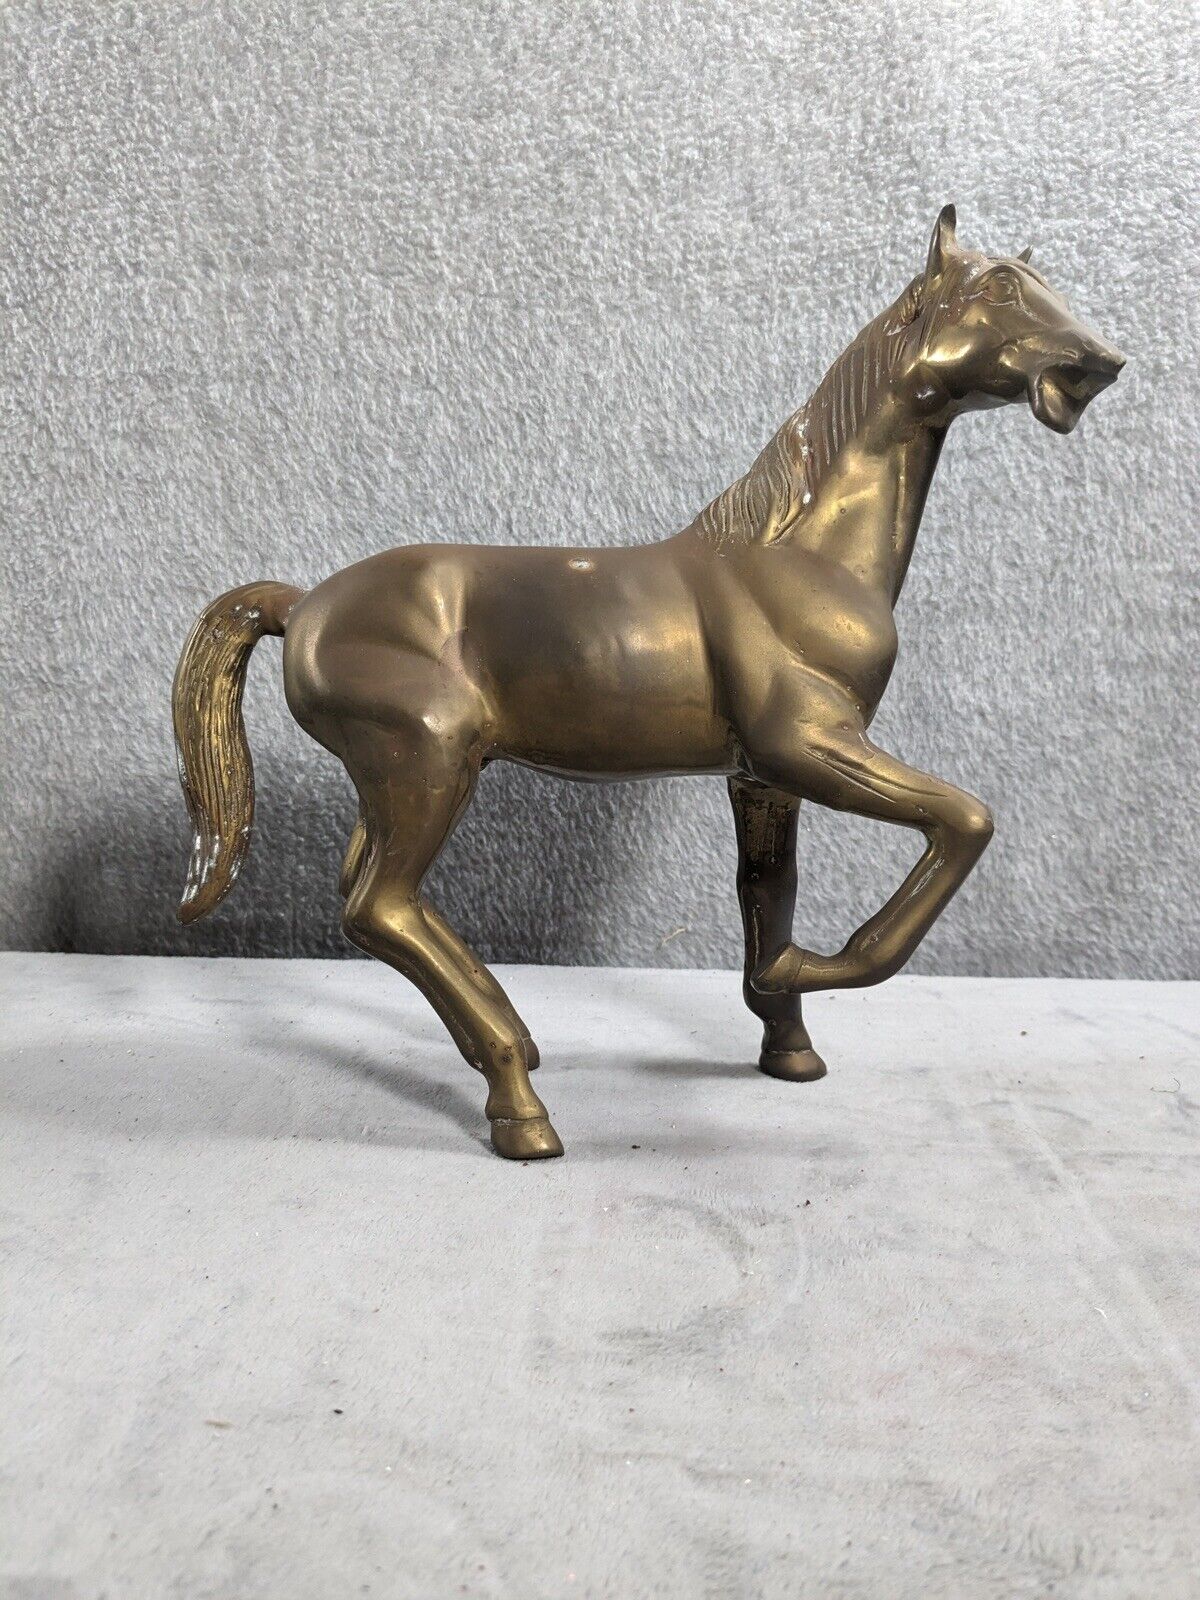 Beautiful Vintage Solid Brass Horse Figure - Figurine 9” Tall